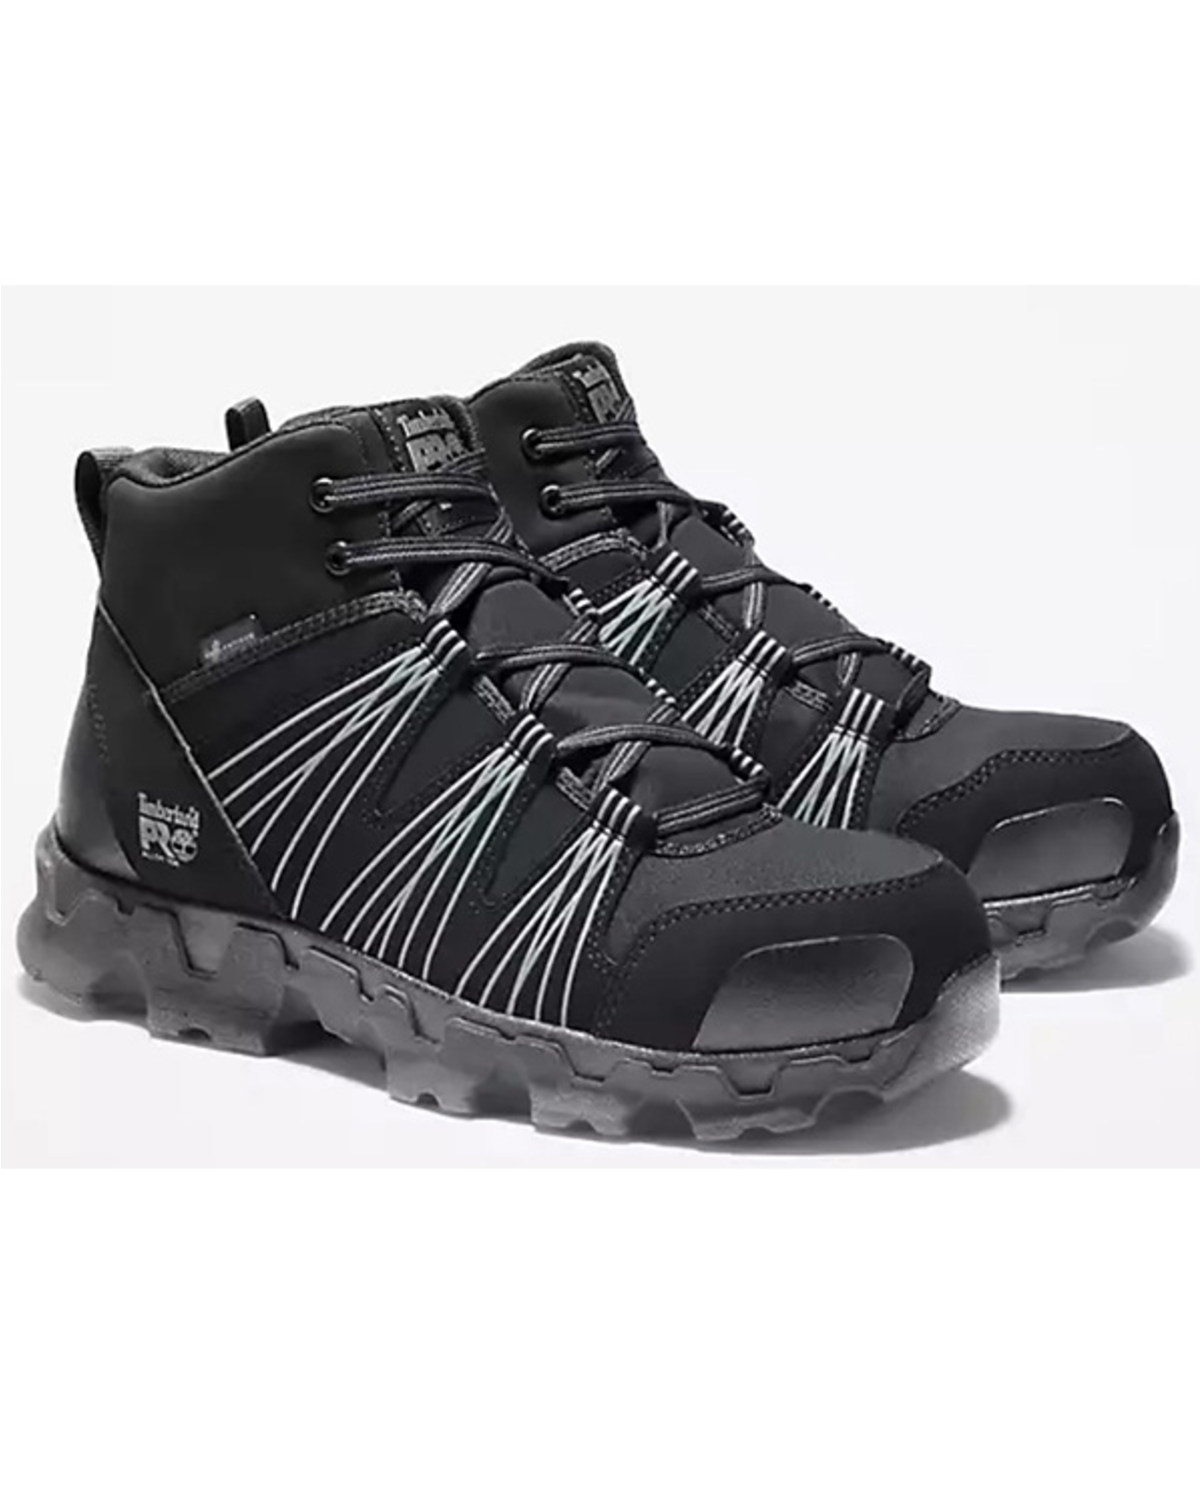 Timberland PRO Men's Powertrain Work Sneakers - Alloy Toe